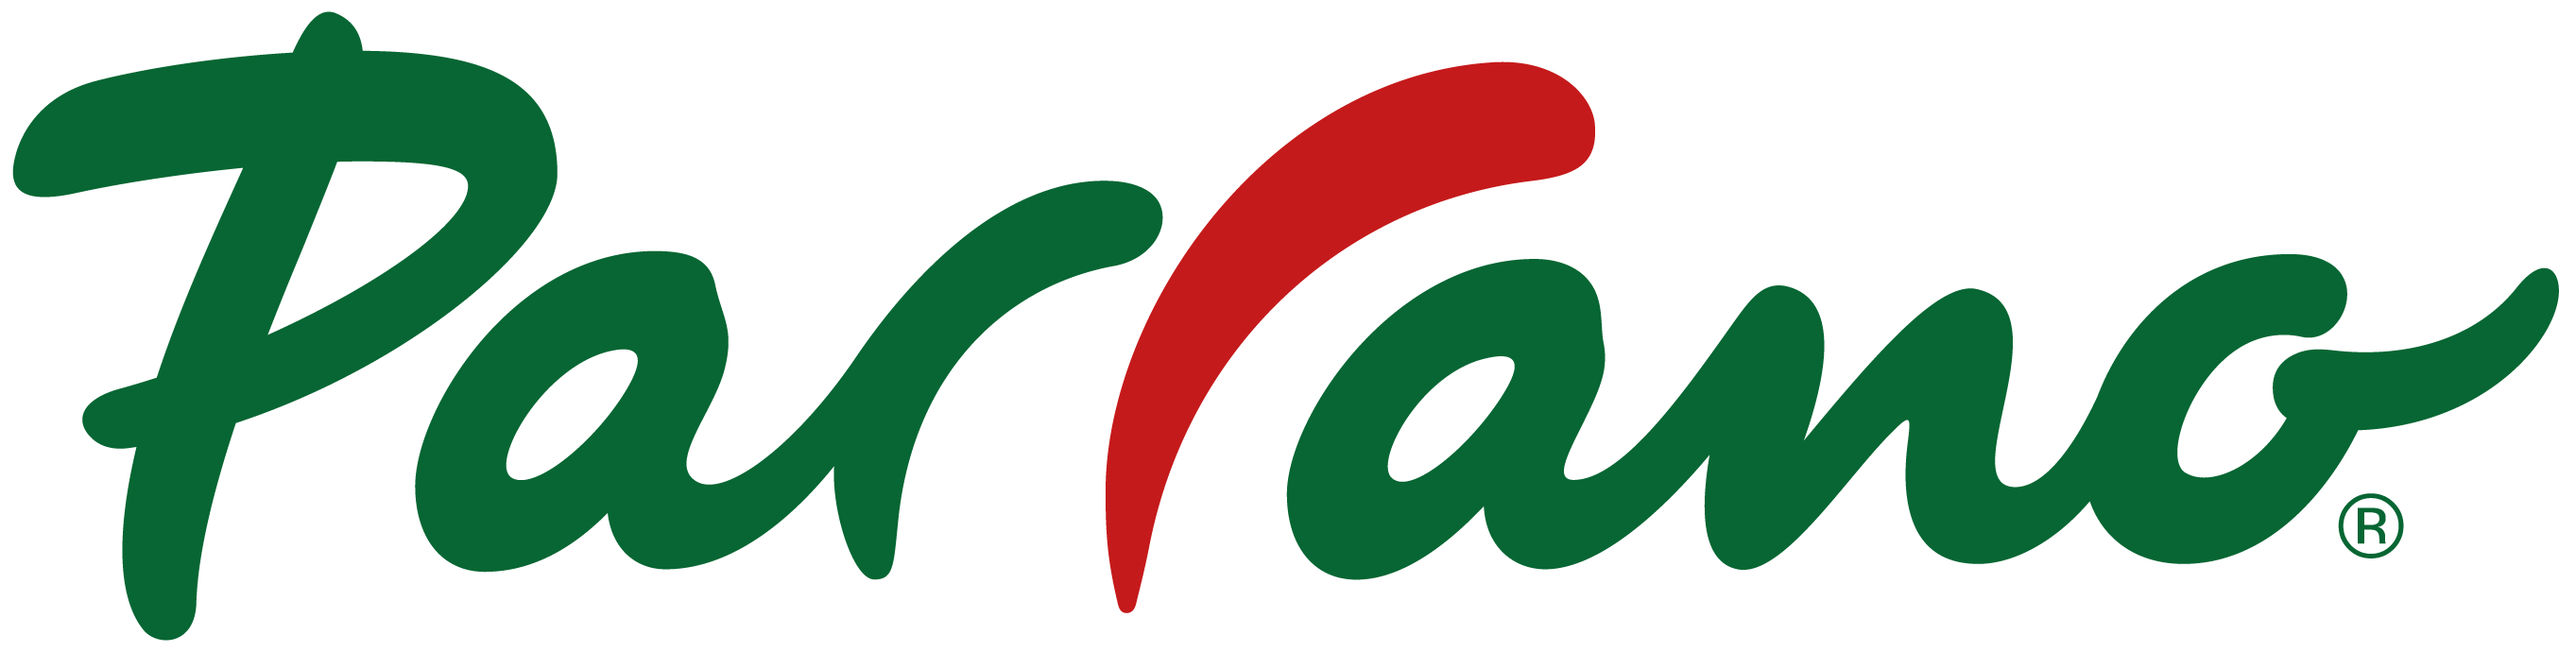 Logo_QuesosParrano